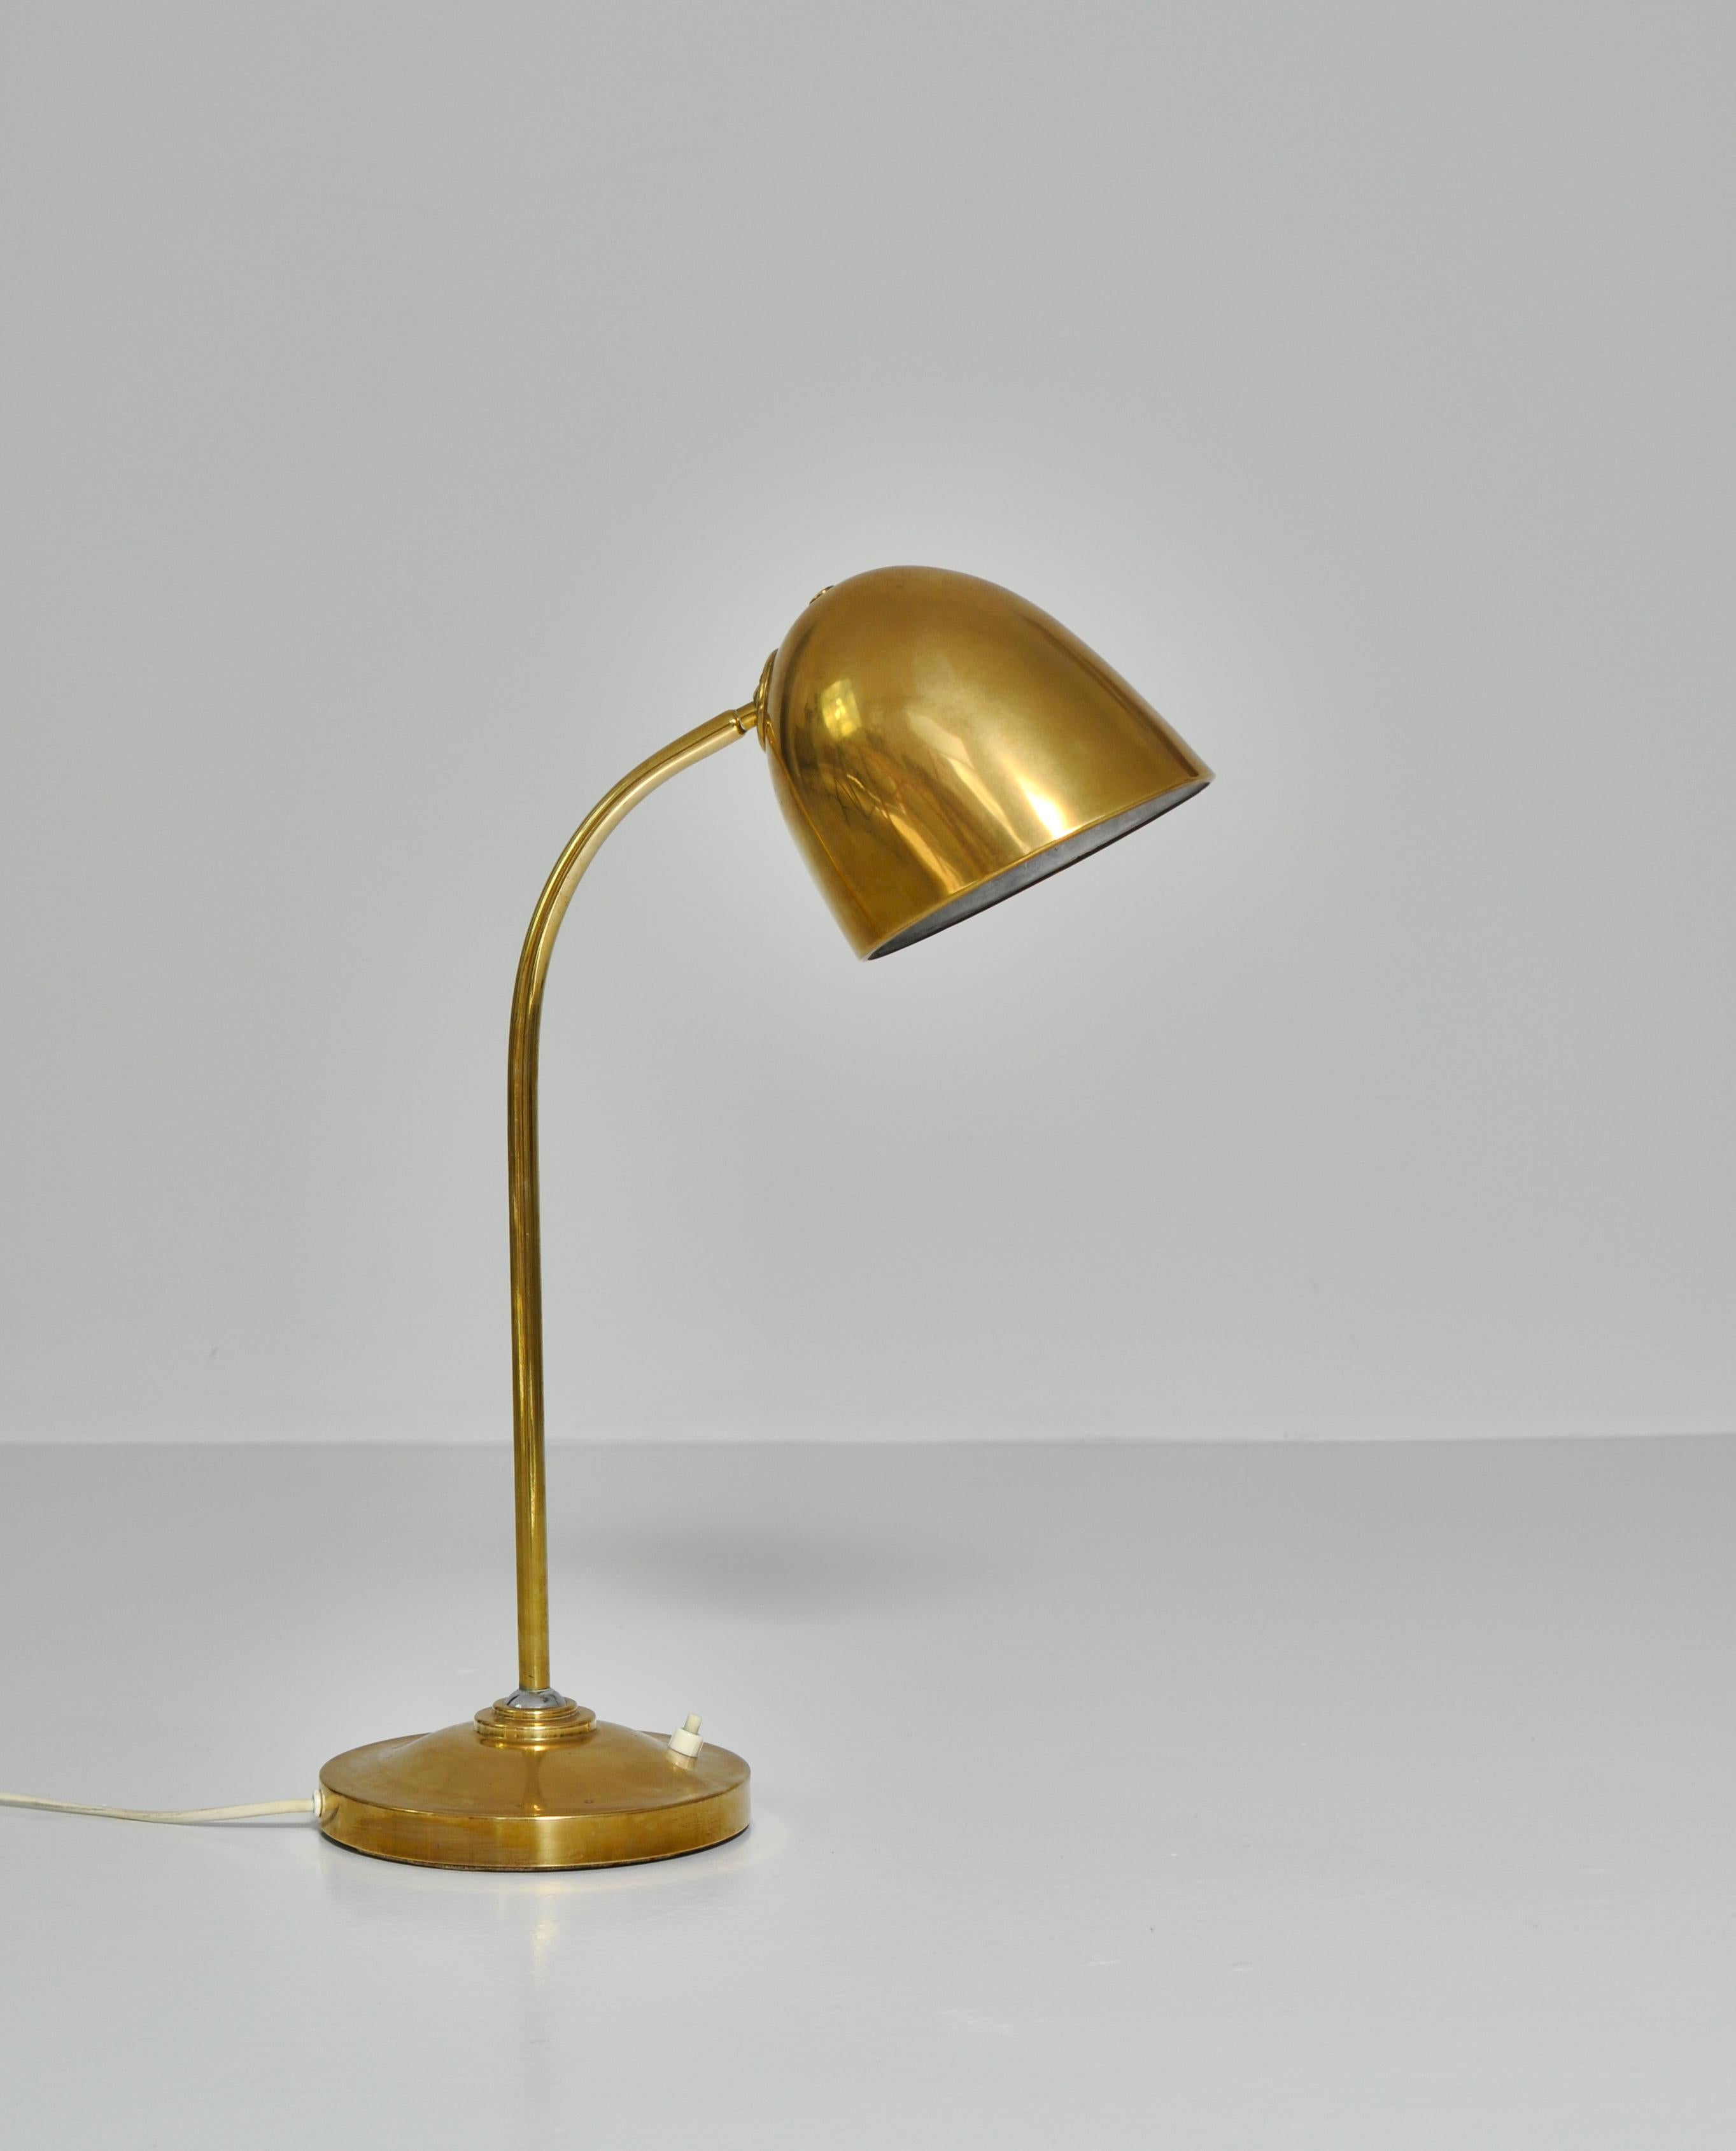 Scandinavian Modern Table Lamp in Brass by Vilhelm Lauritzen for Fog & Mørup, 1940s